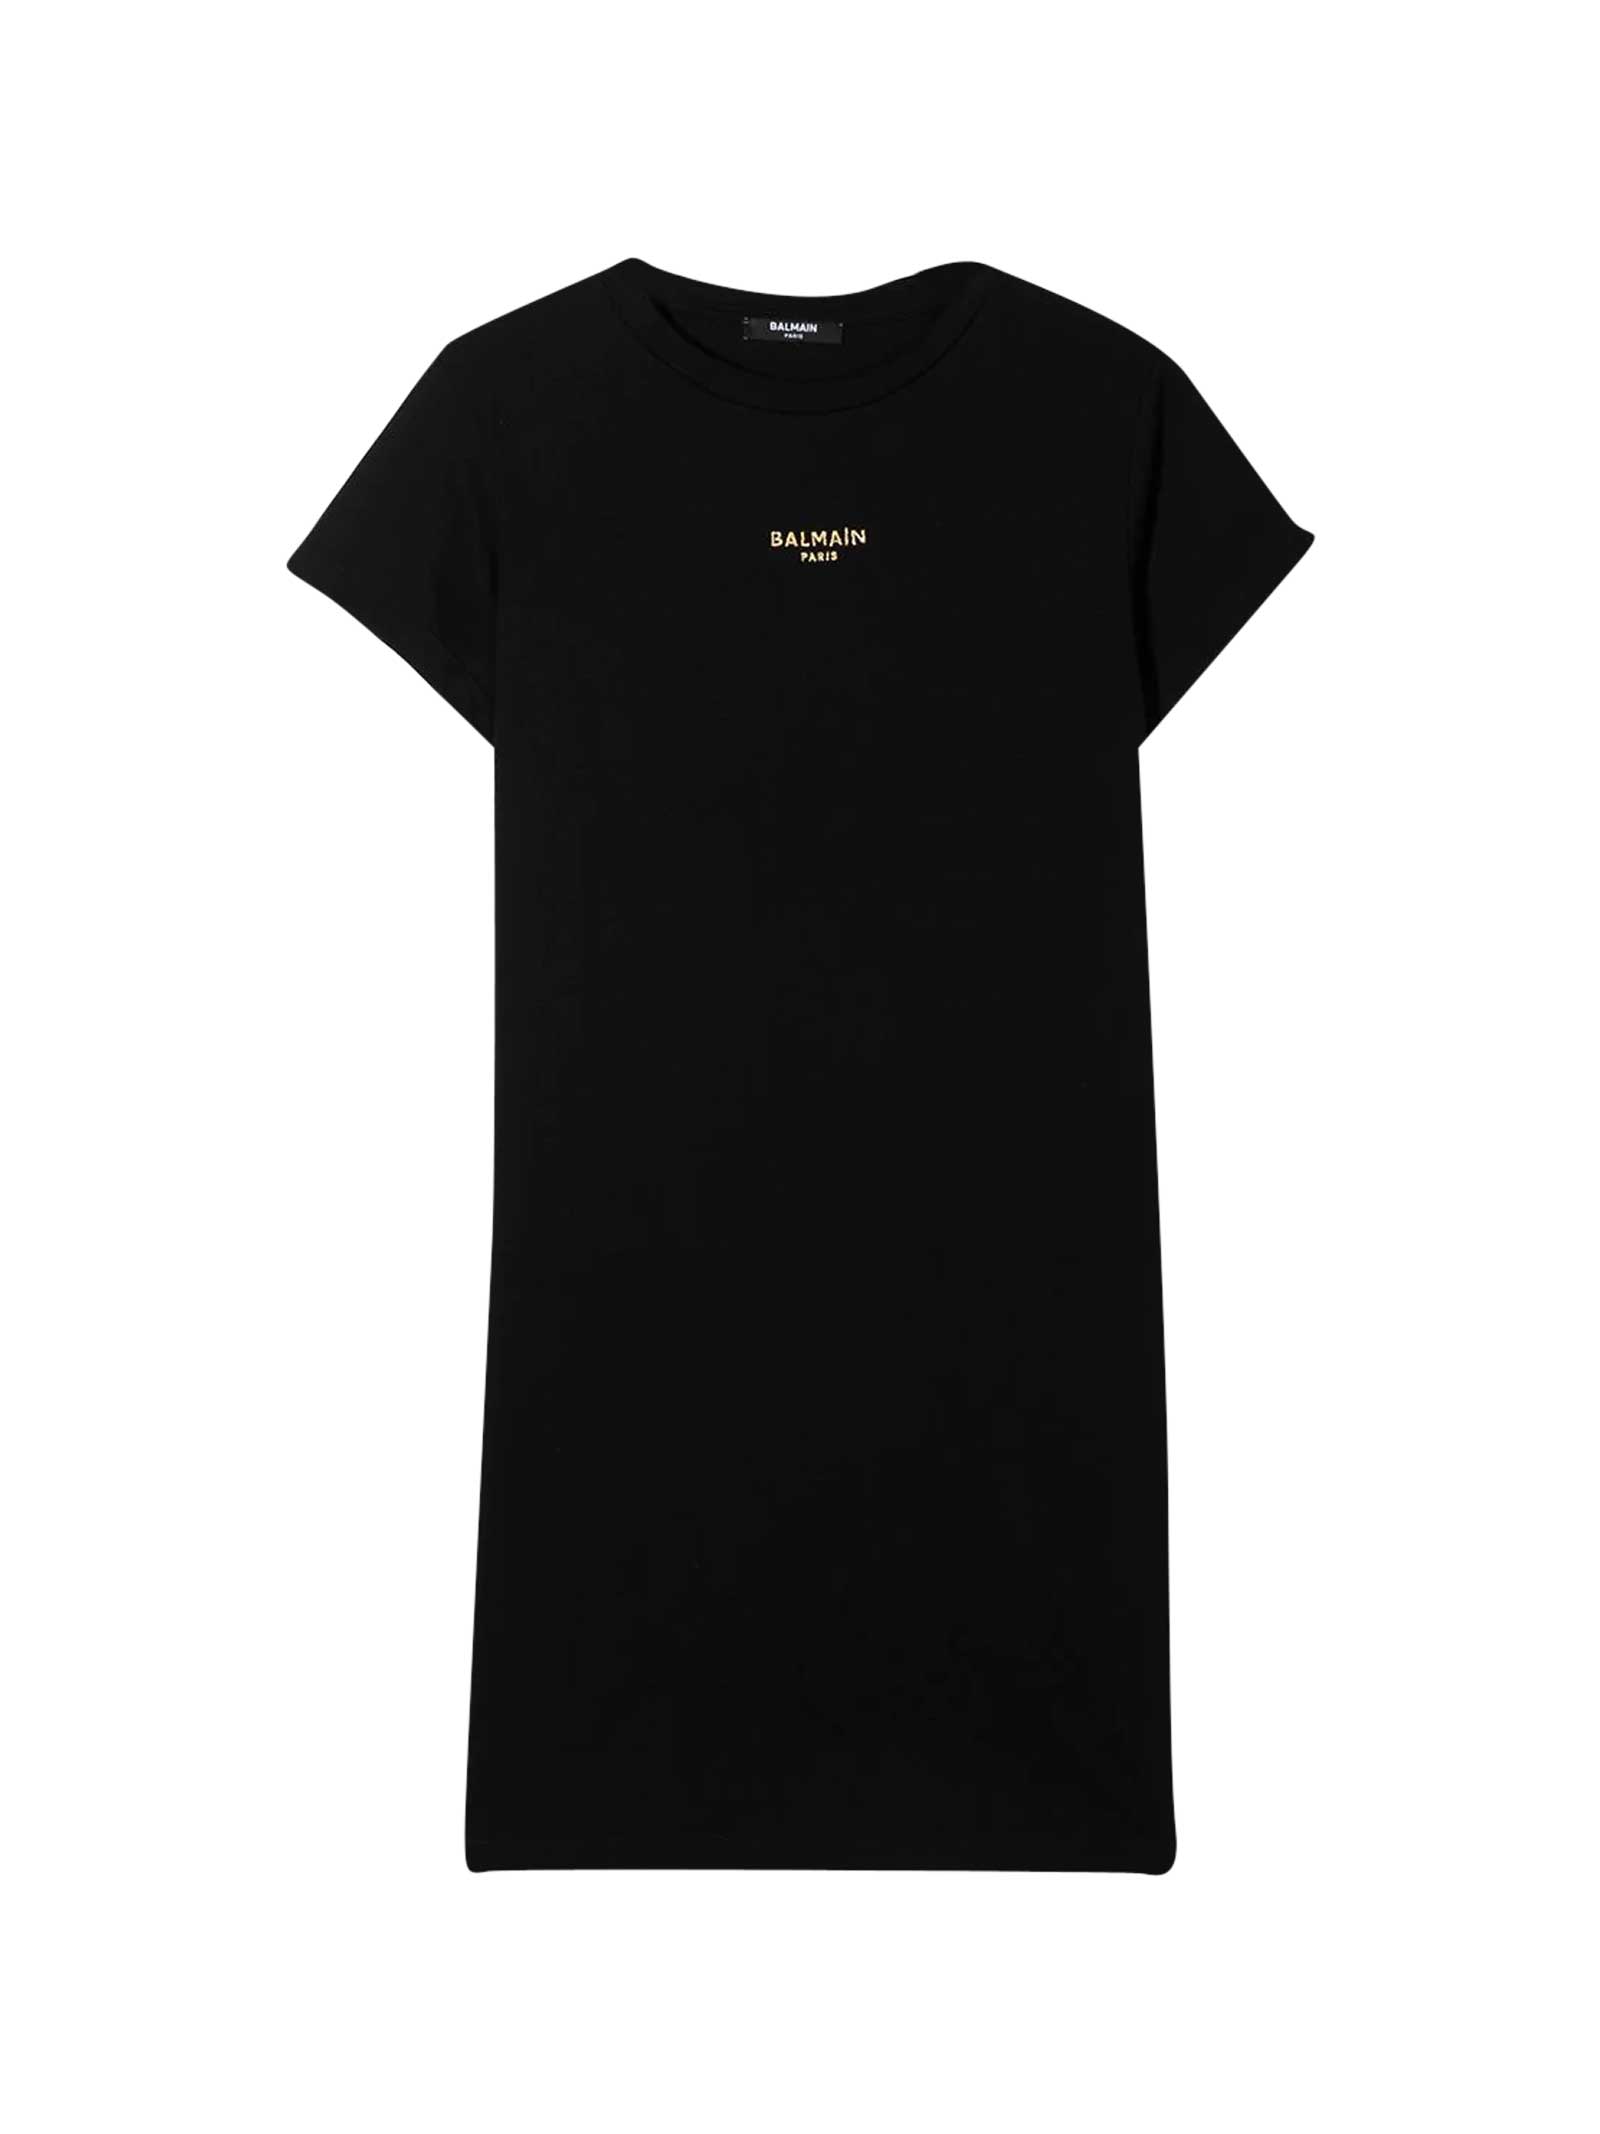 Balmain Black T-shirt Dress